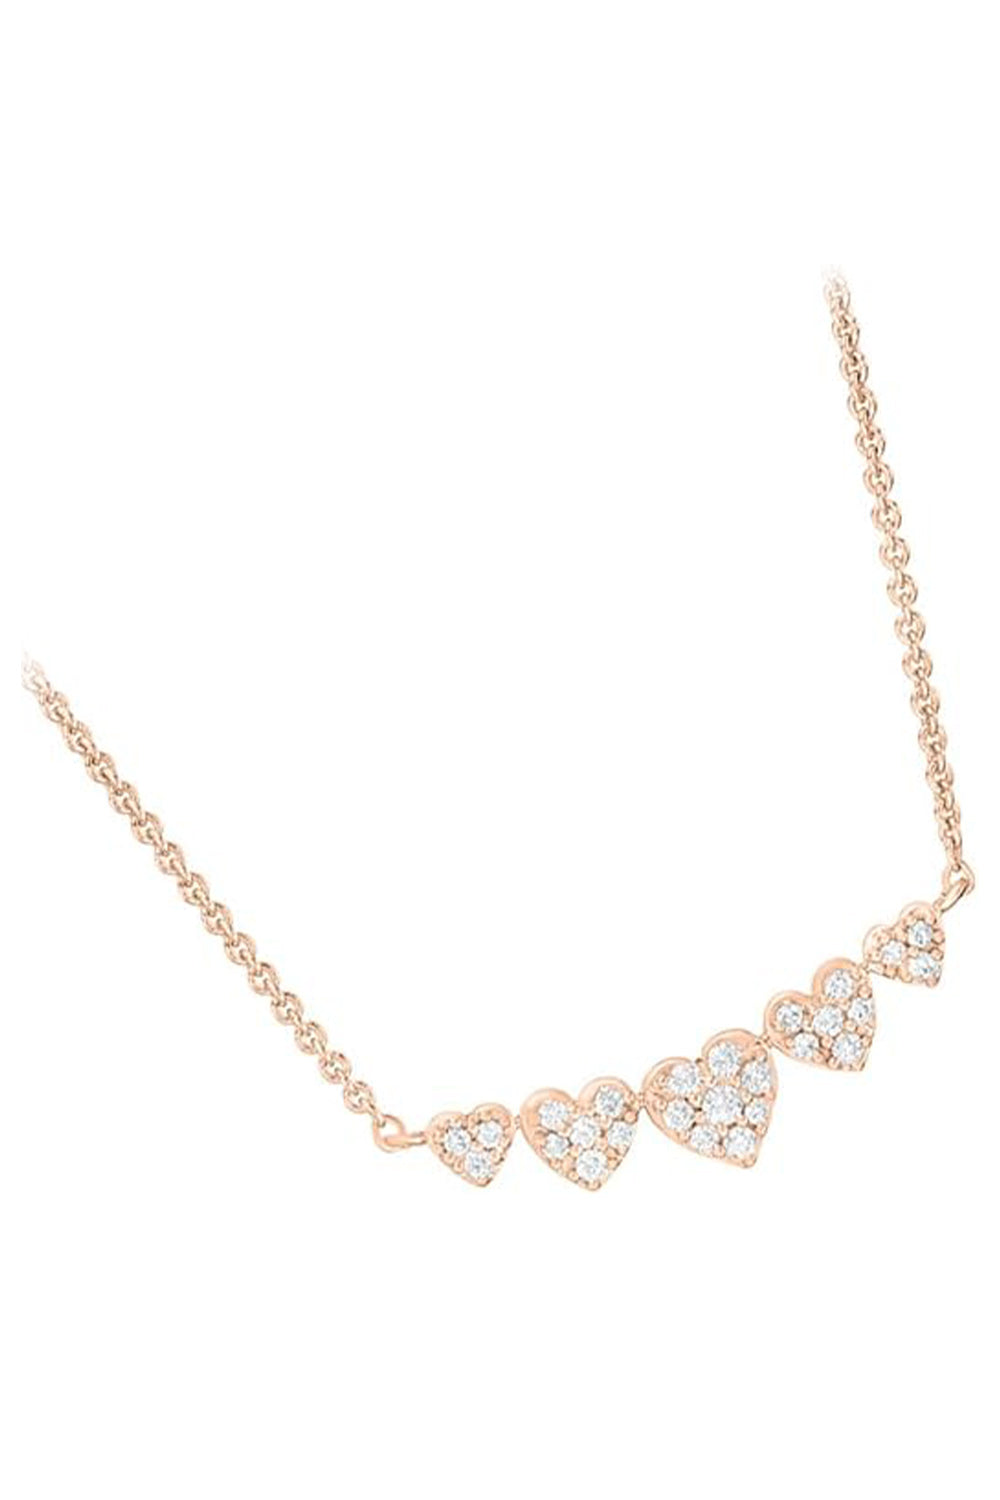 Rose Gold Color Five Heart Bar Pendant Necklace